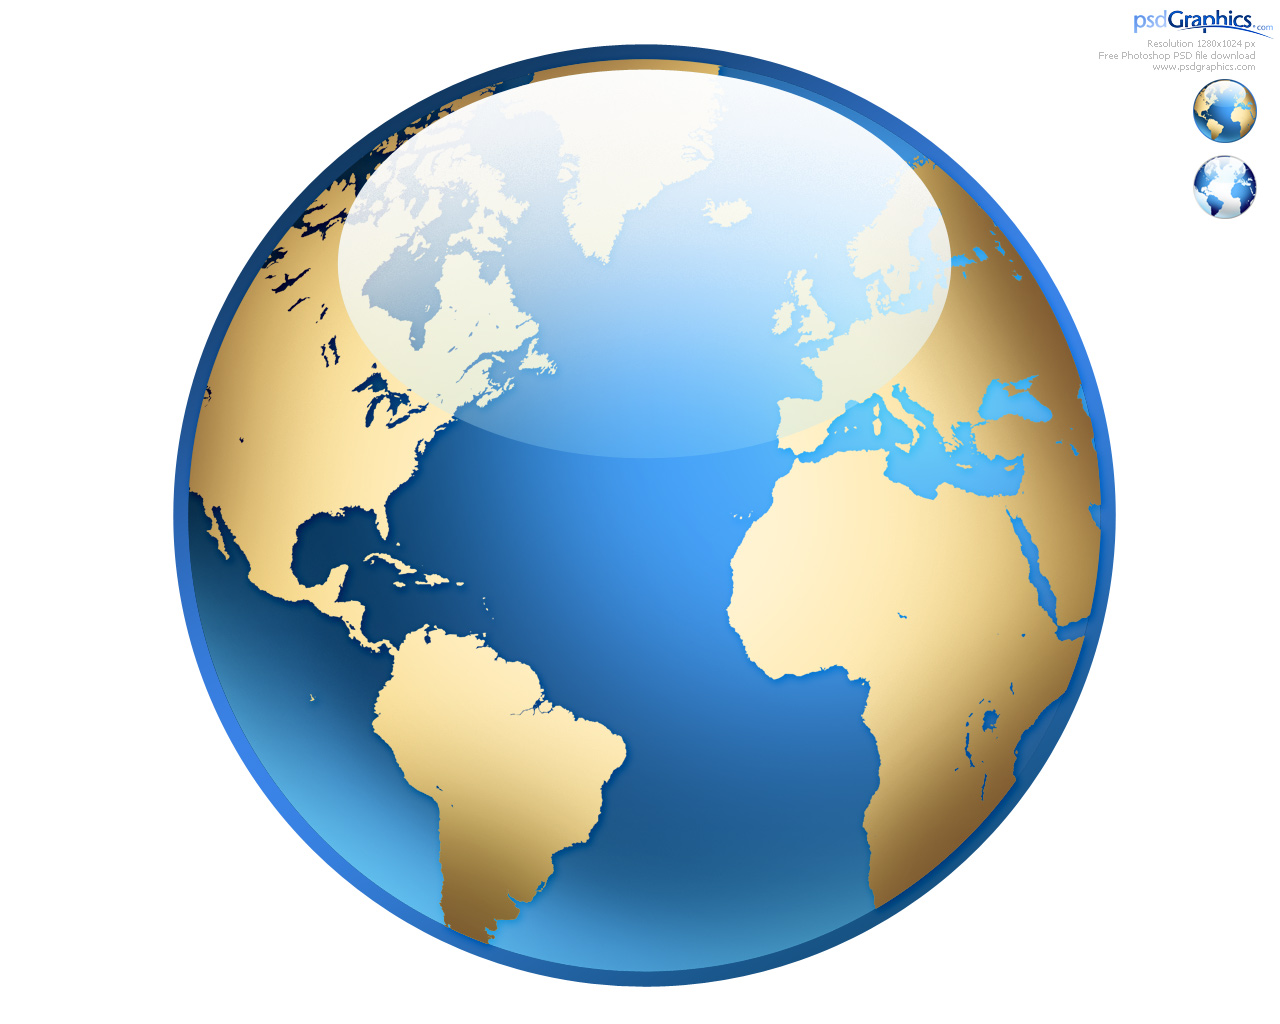 Photoshop world globe icon | PSDGraphics